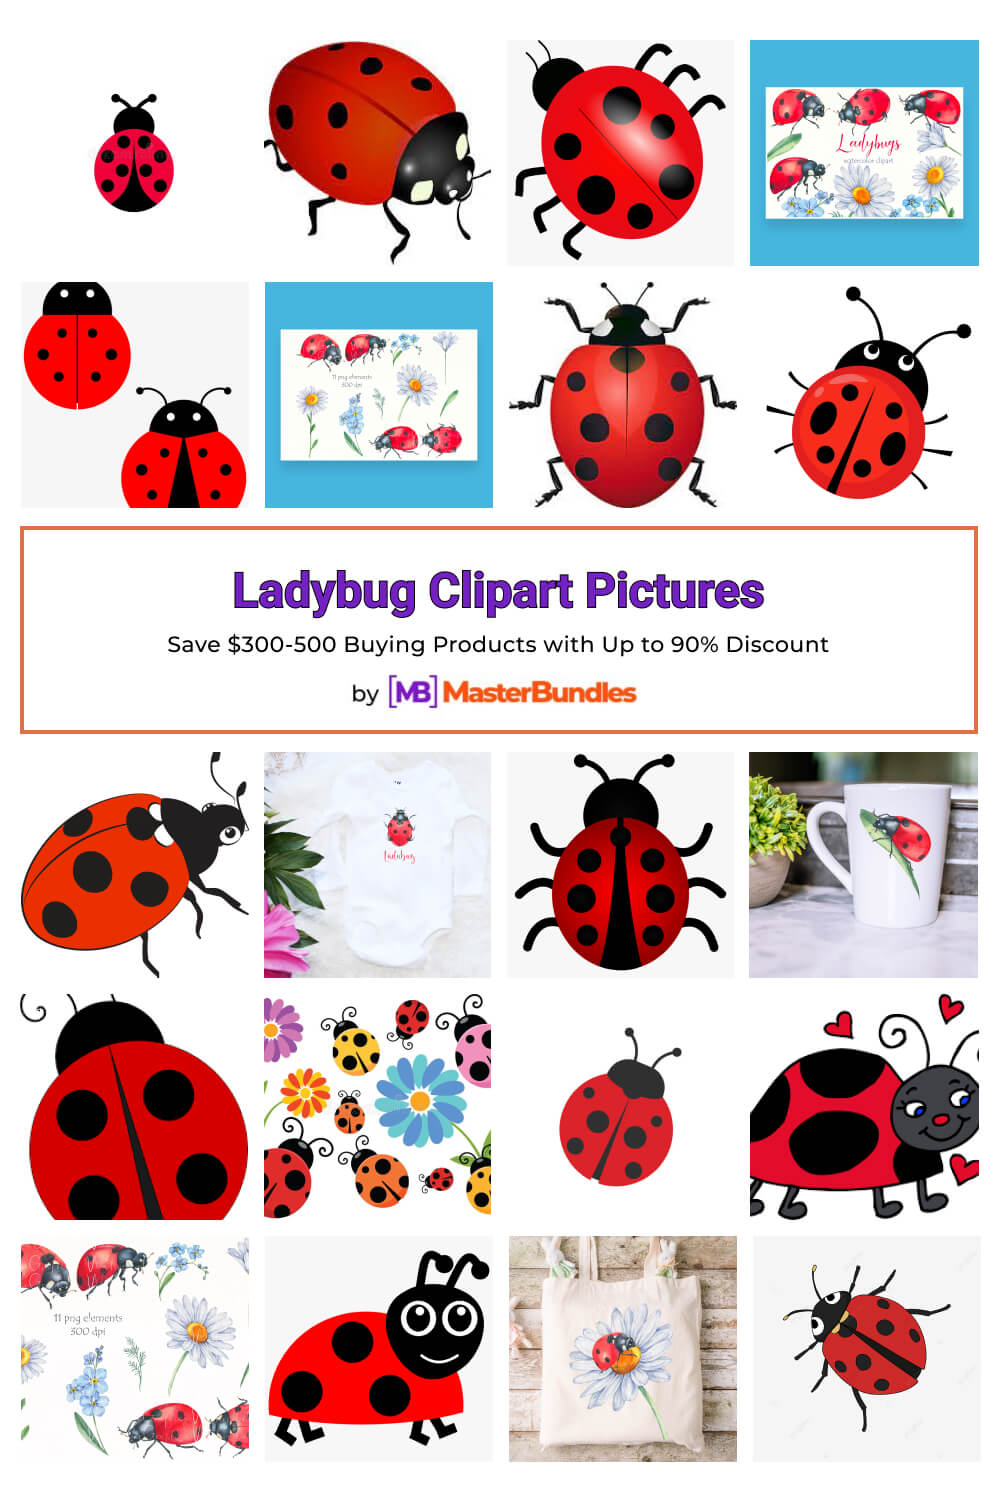 ladybug clipart pictures pinterest image.